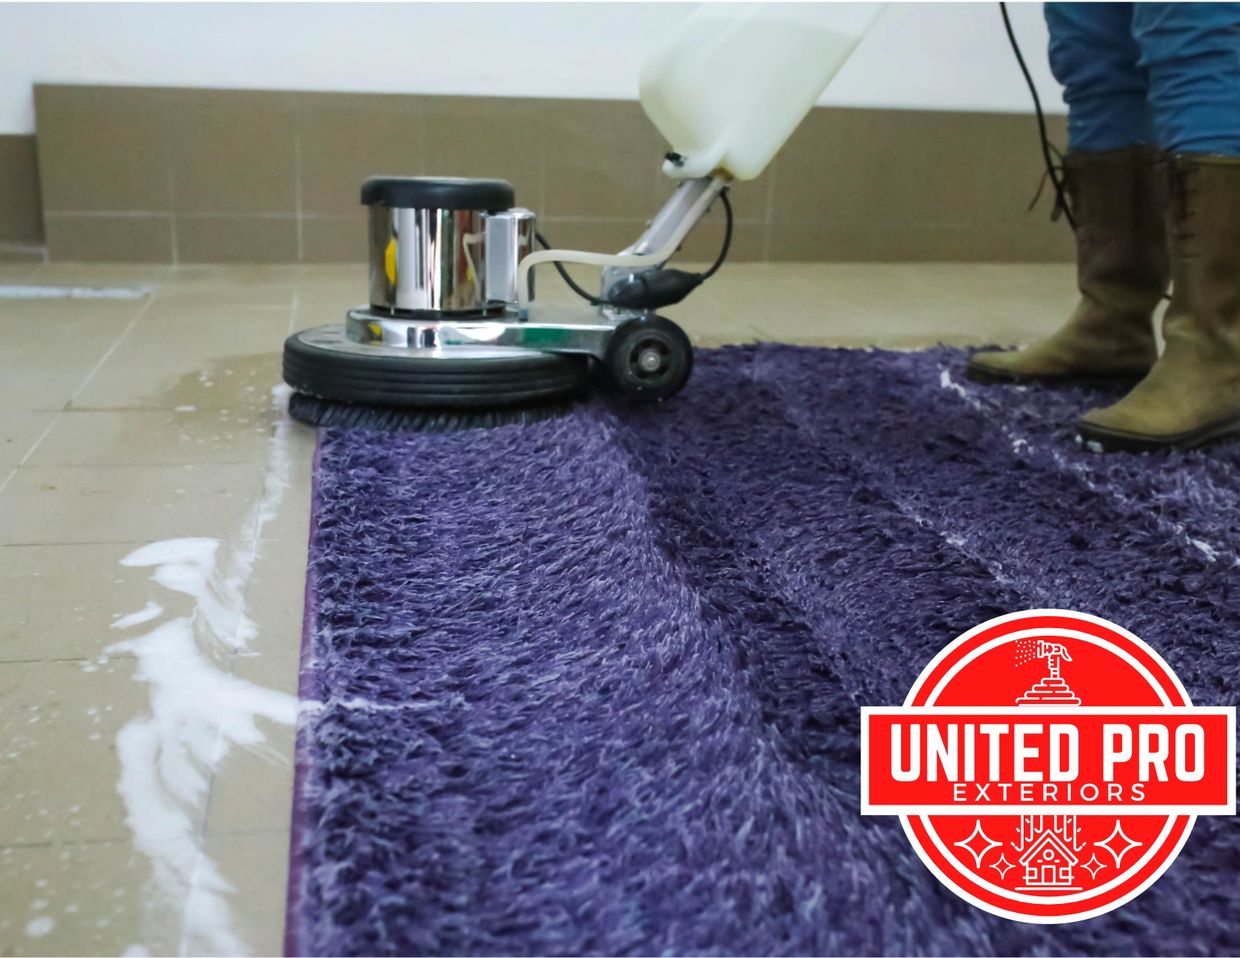 United Pro Exteriors - Carpet Cleaning, VLM Encapsulation